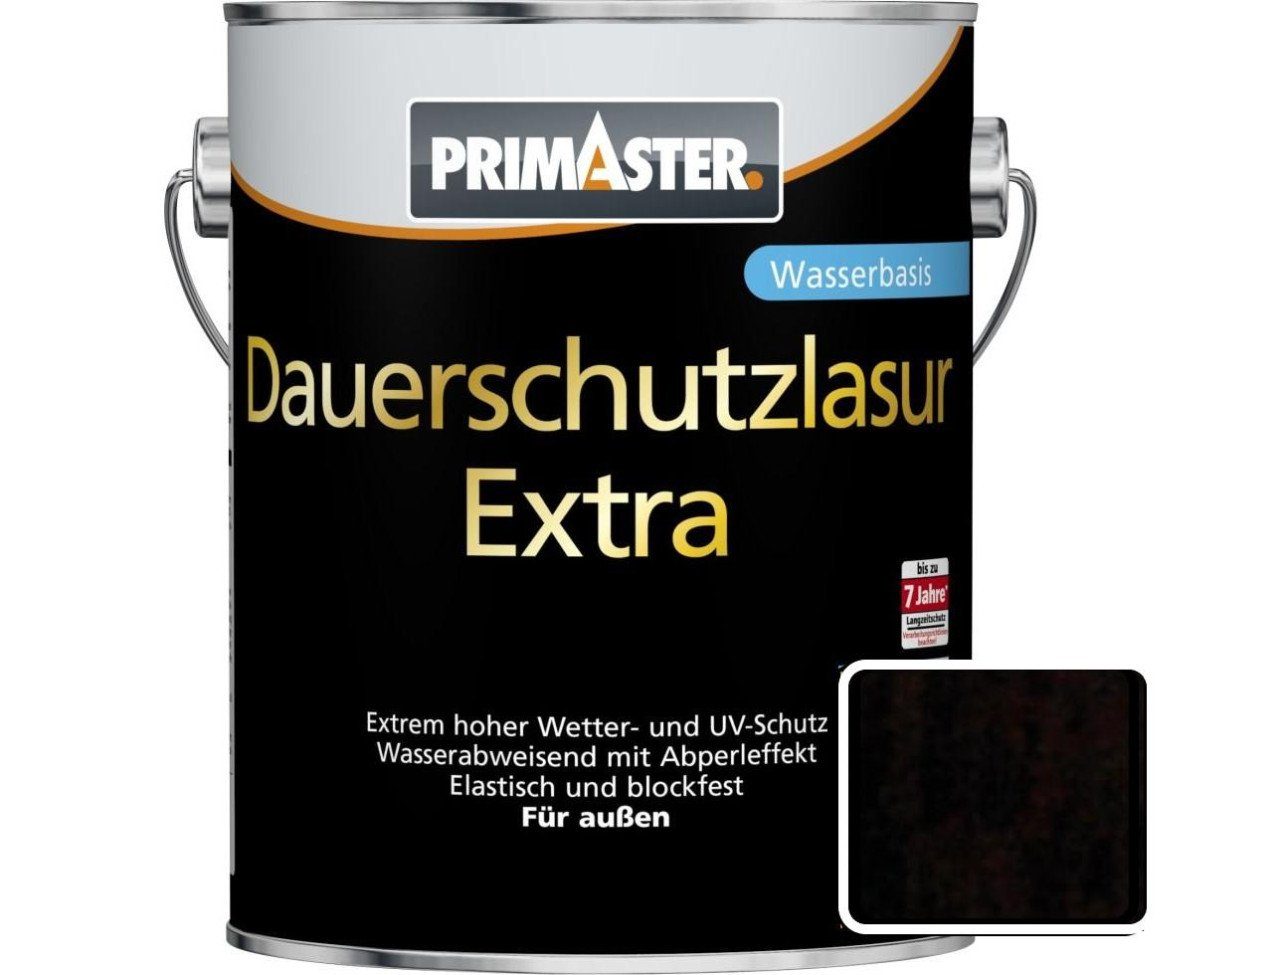 Dauerschutzlasur 5 L Primaster Extra Primaster palisander Lasur